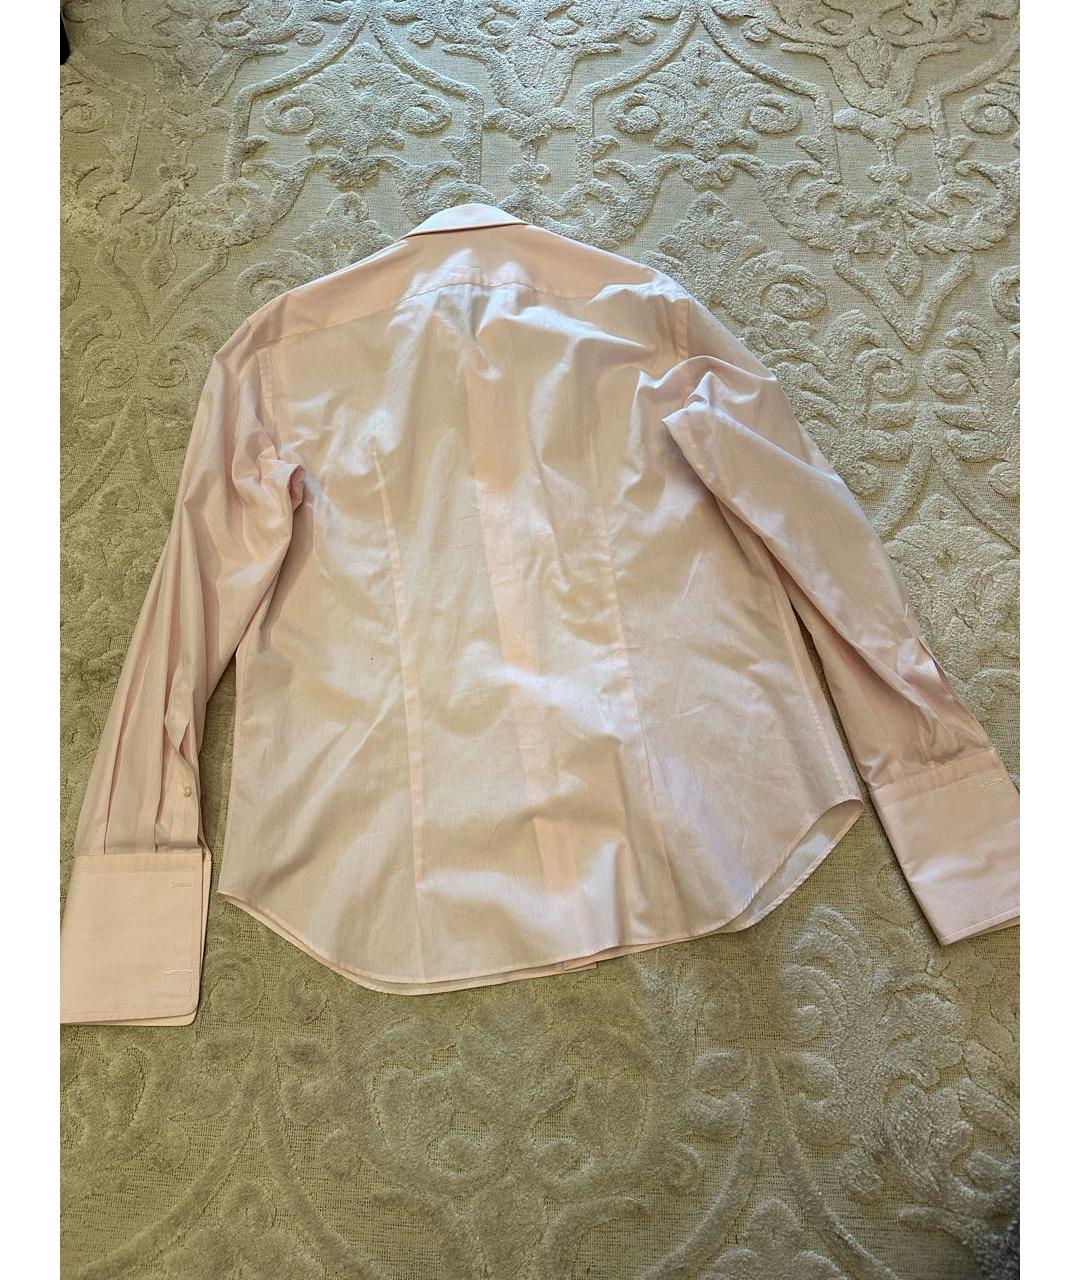 BRIONI Розовая хлопковая кэжуал рубашка, фото 3